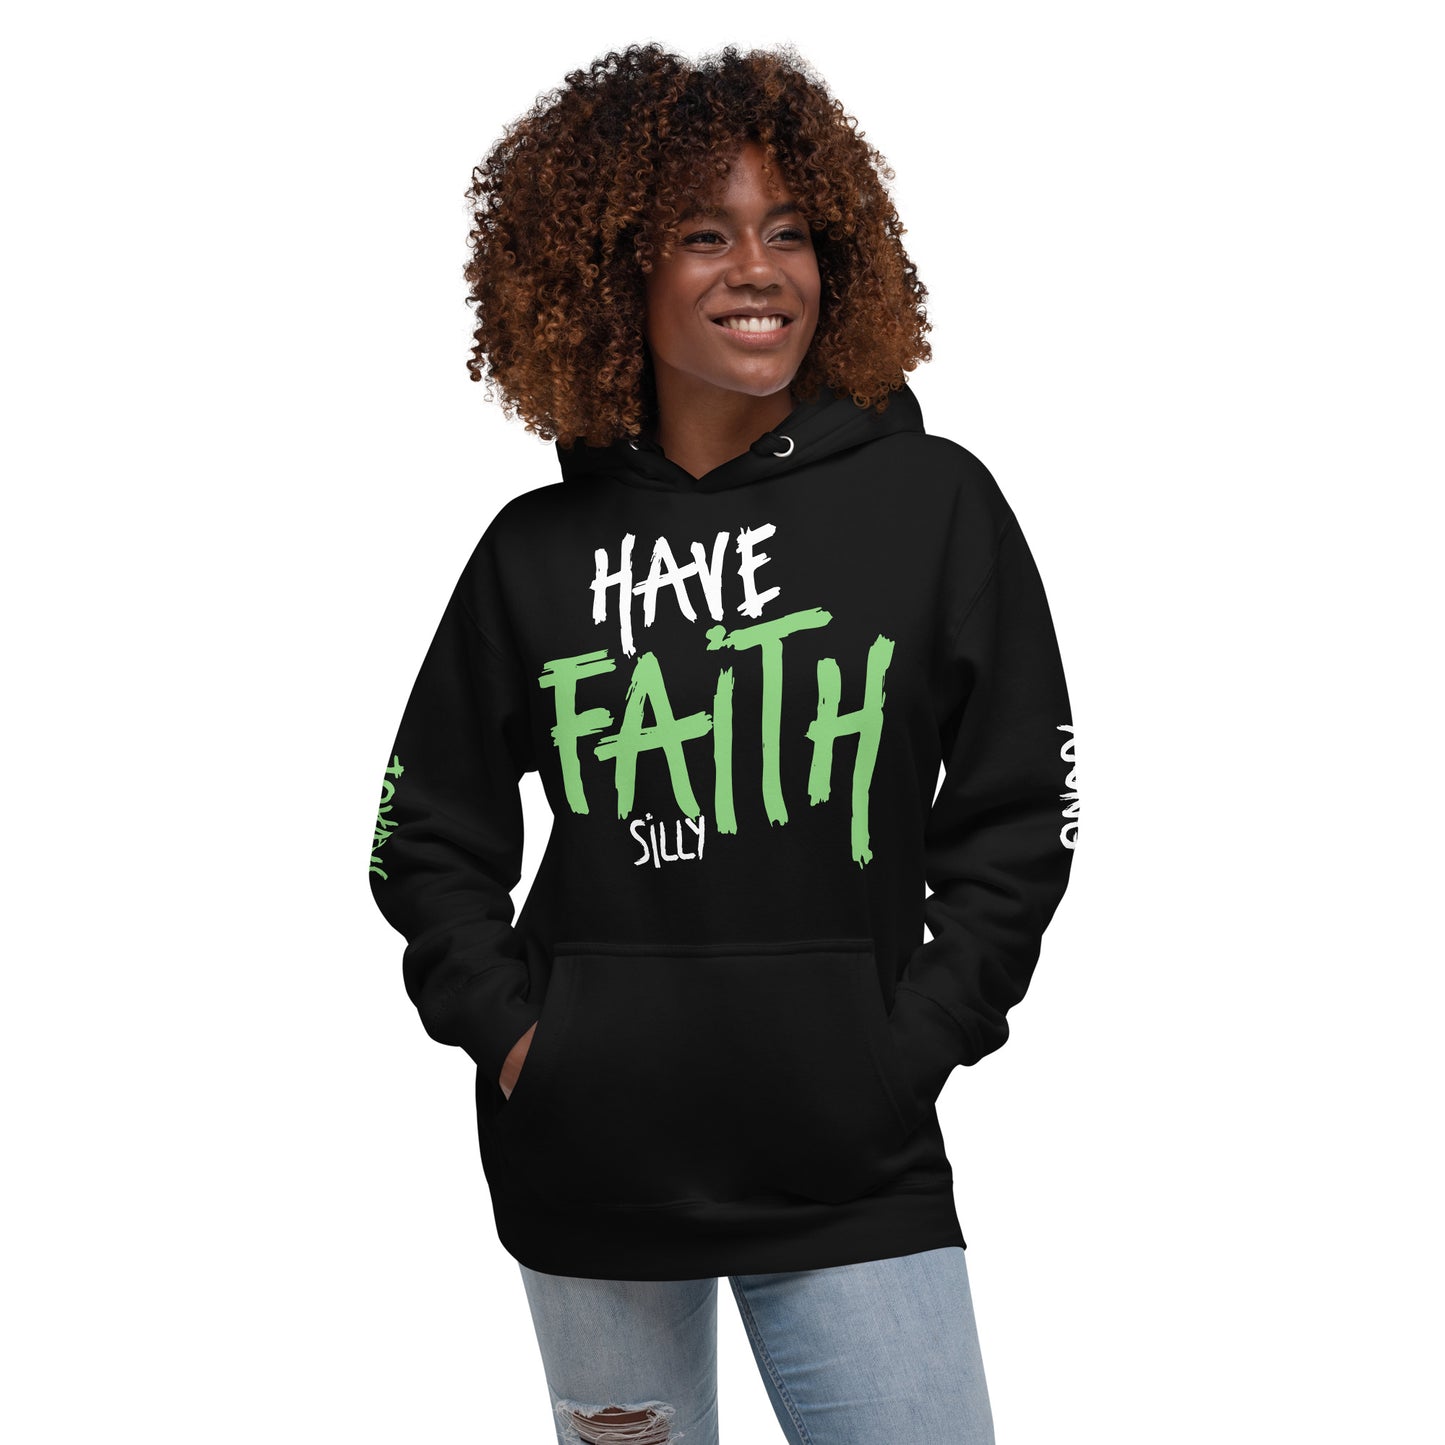 Have Faith Silly - Unisex Hoodie